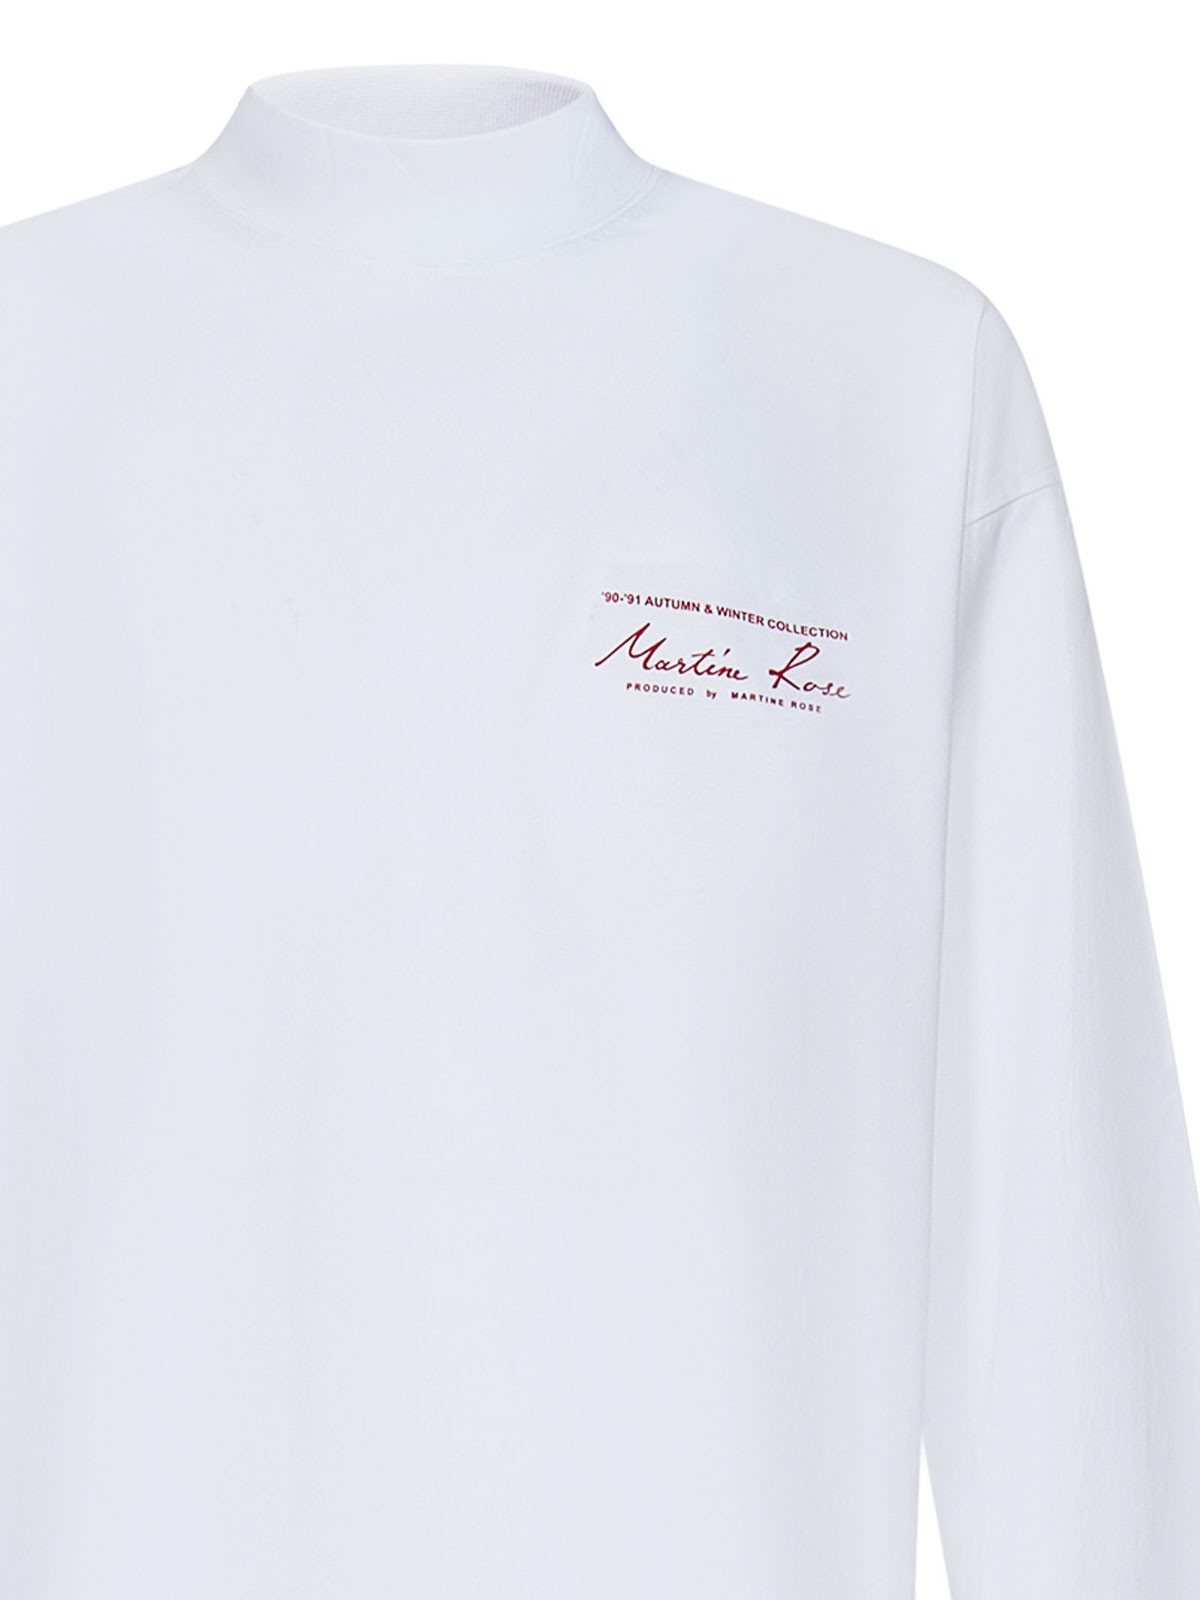 T-shirts Martine Rose - White Cotton Jersey Funnel Neck - CMR605WHITE